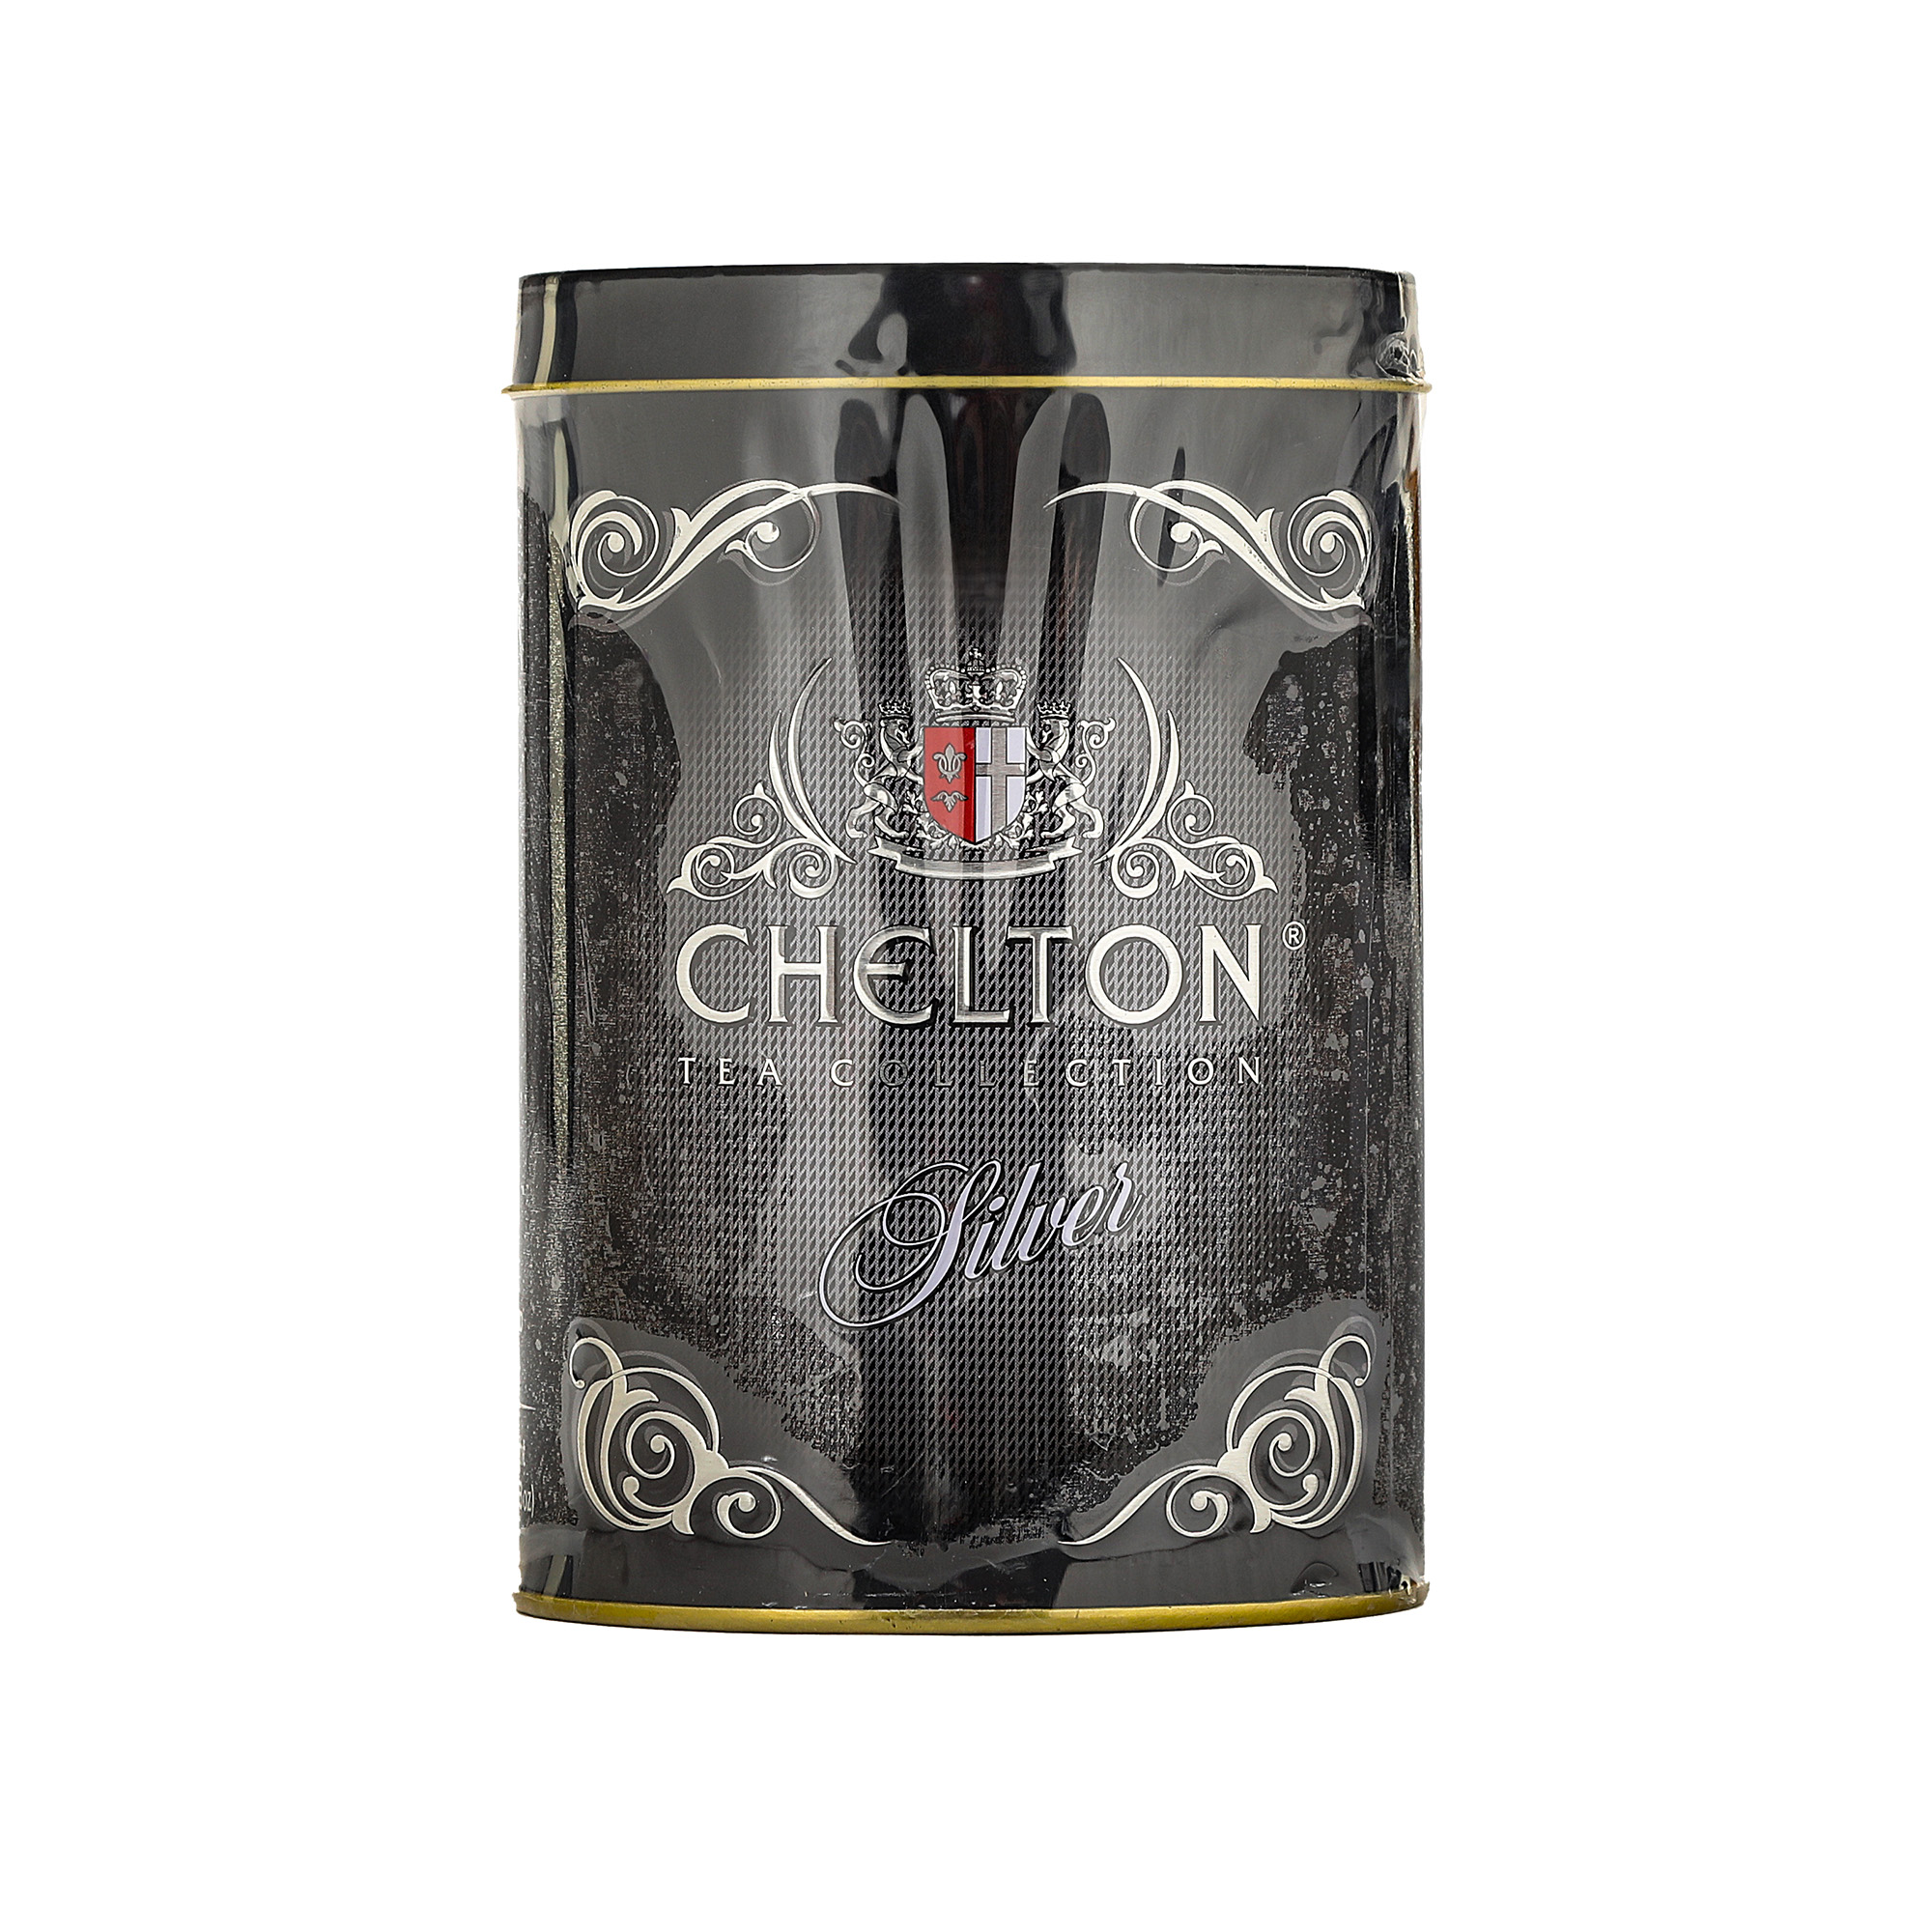 Чай Chelton Отборный среднелистовой, 100 г чай chelton музыкальная шкатулка вальс 100 г жестяная банка